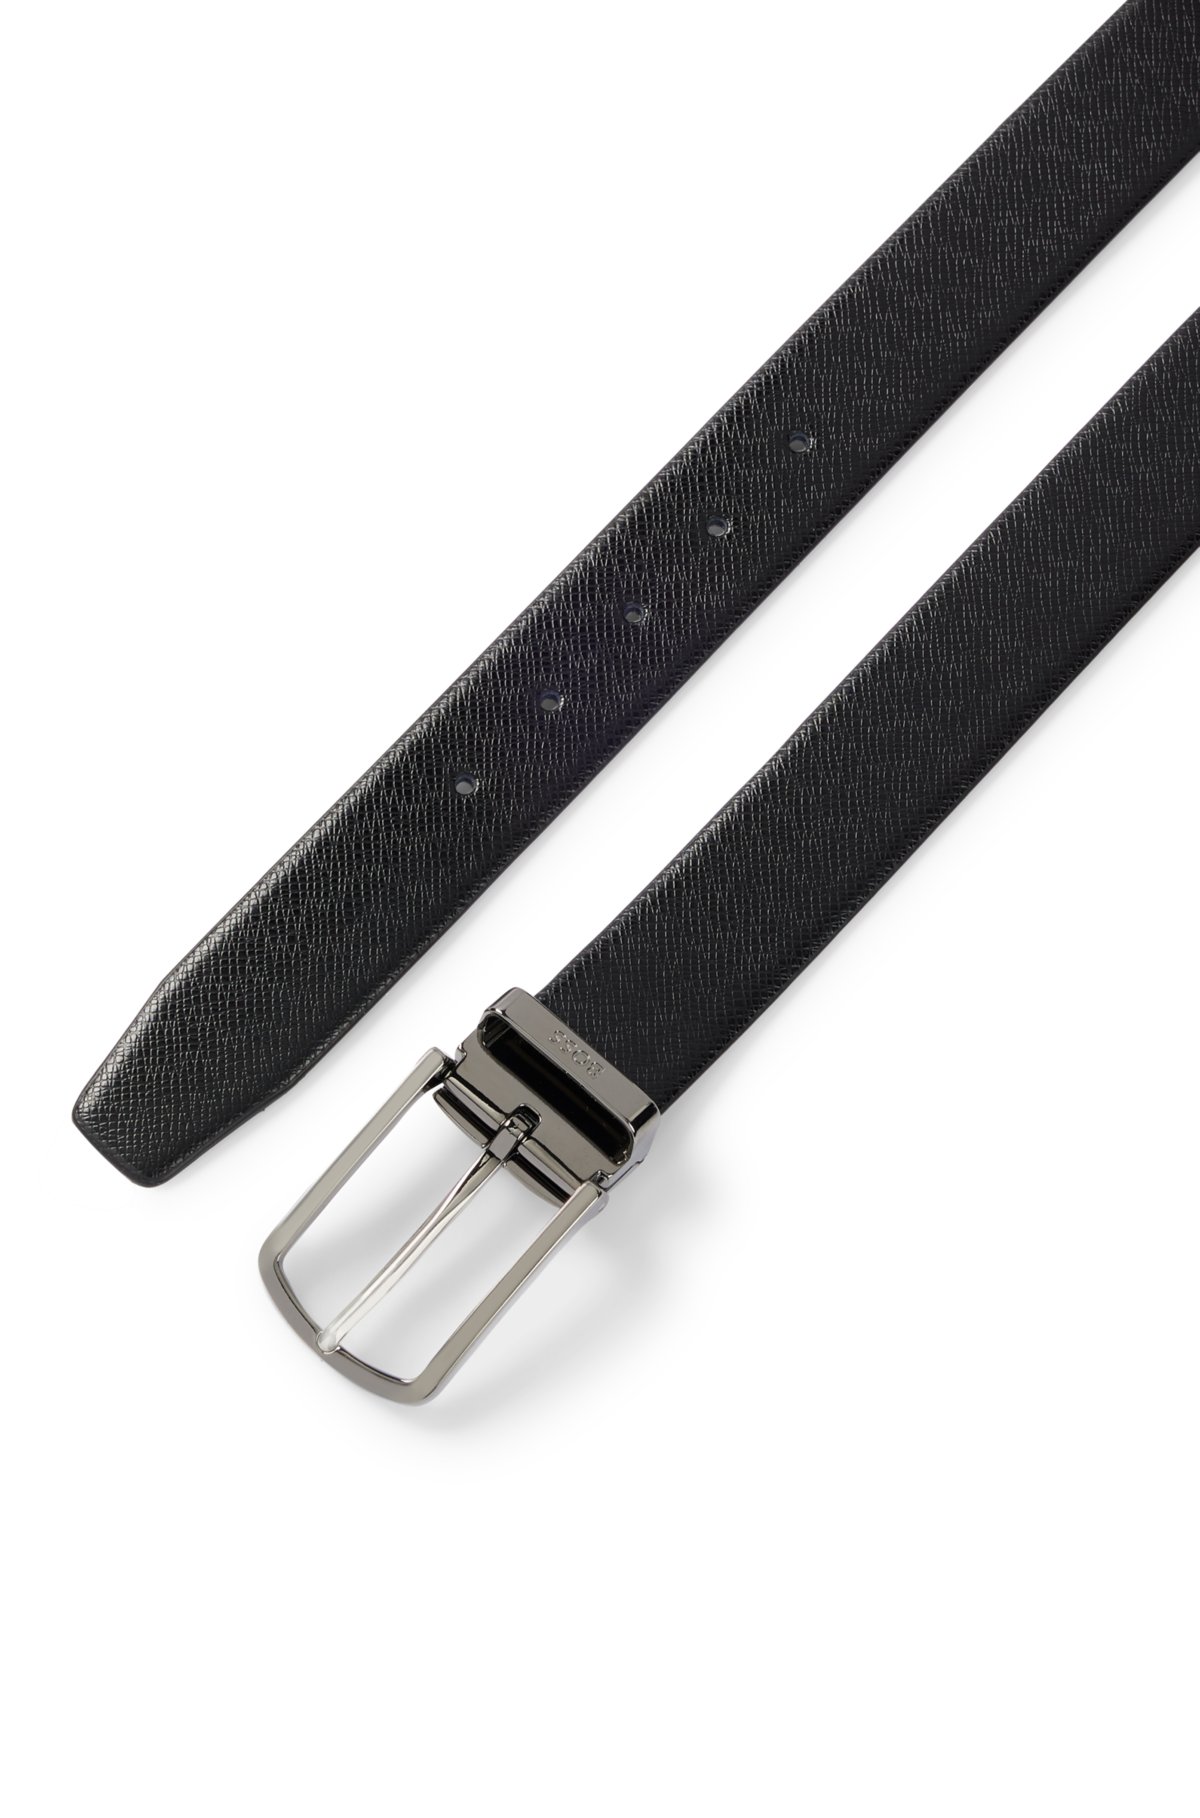 Filippo 35mm Reversible Italian Pebble Leather Belt